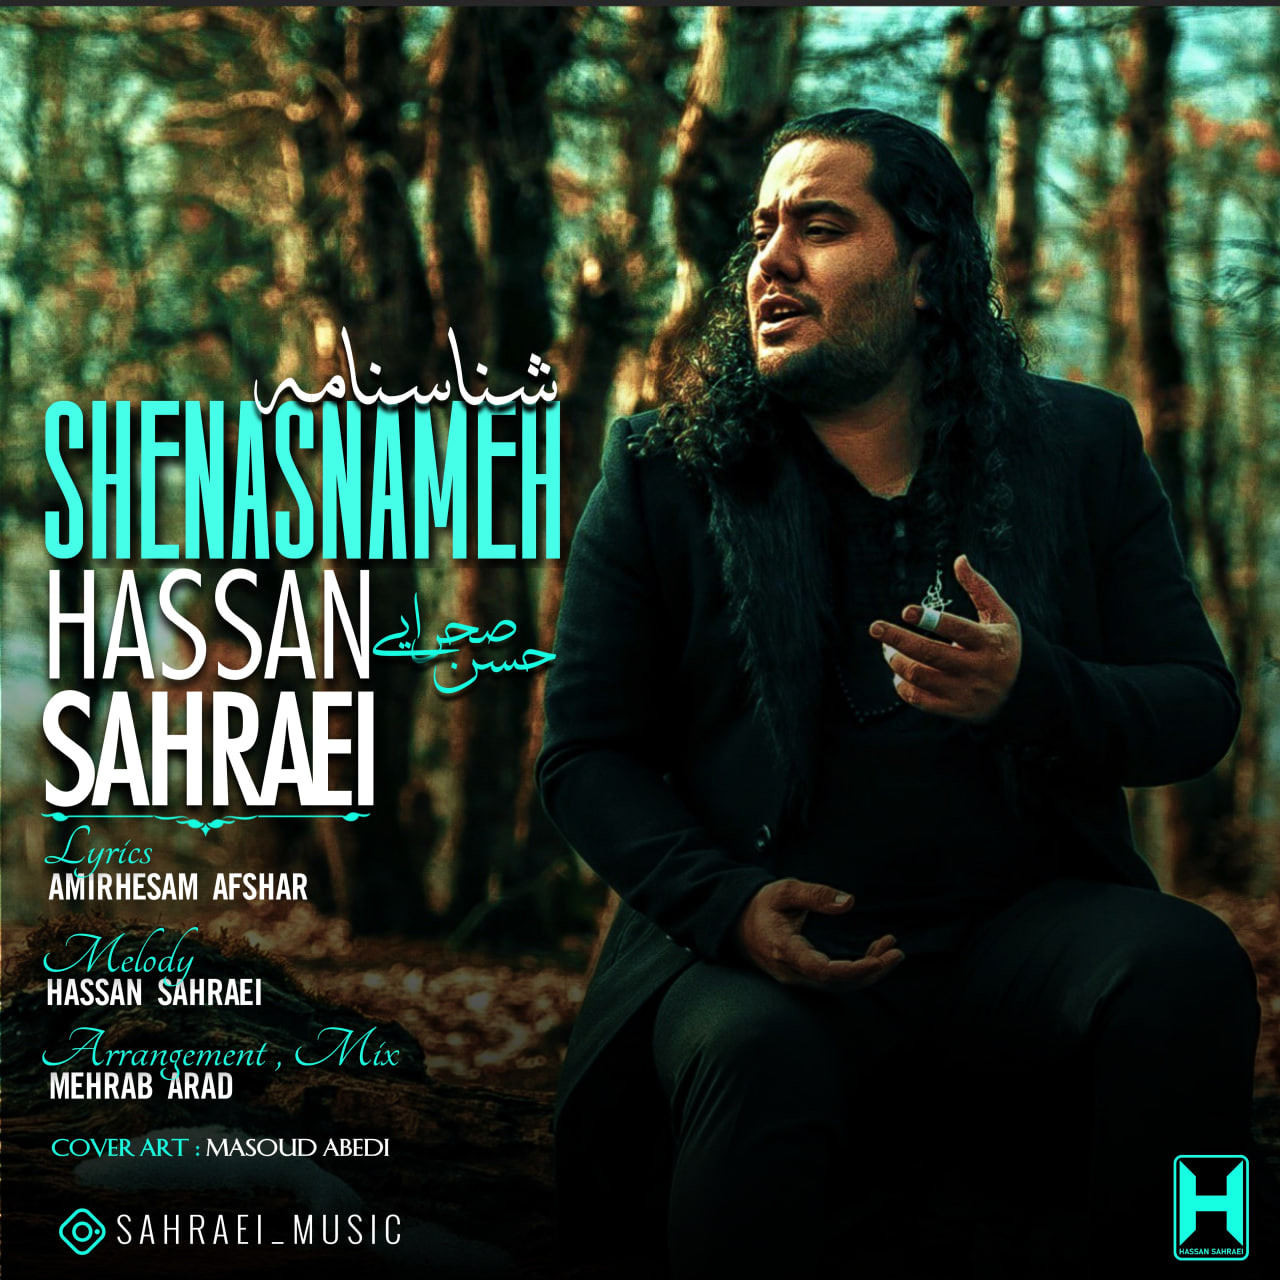 Hassan Sahraei – Shenasnameh